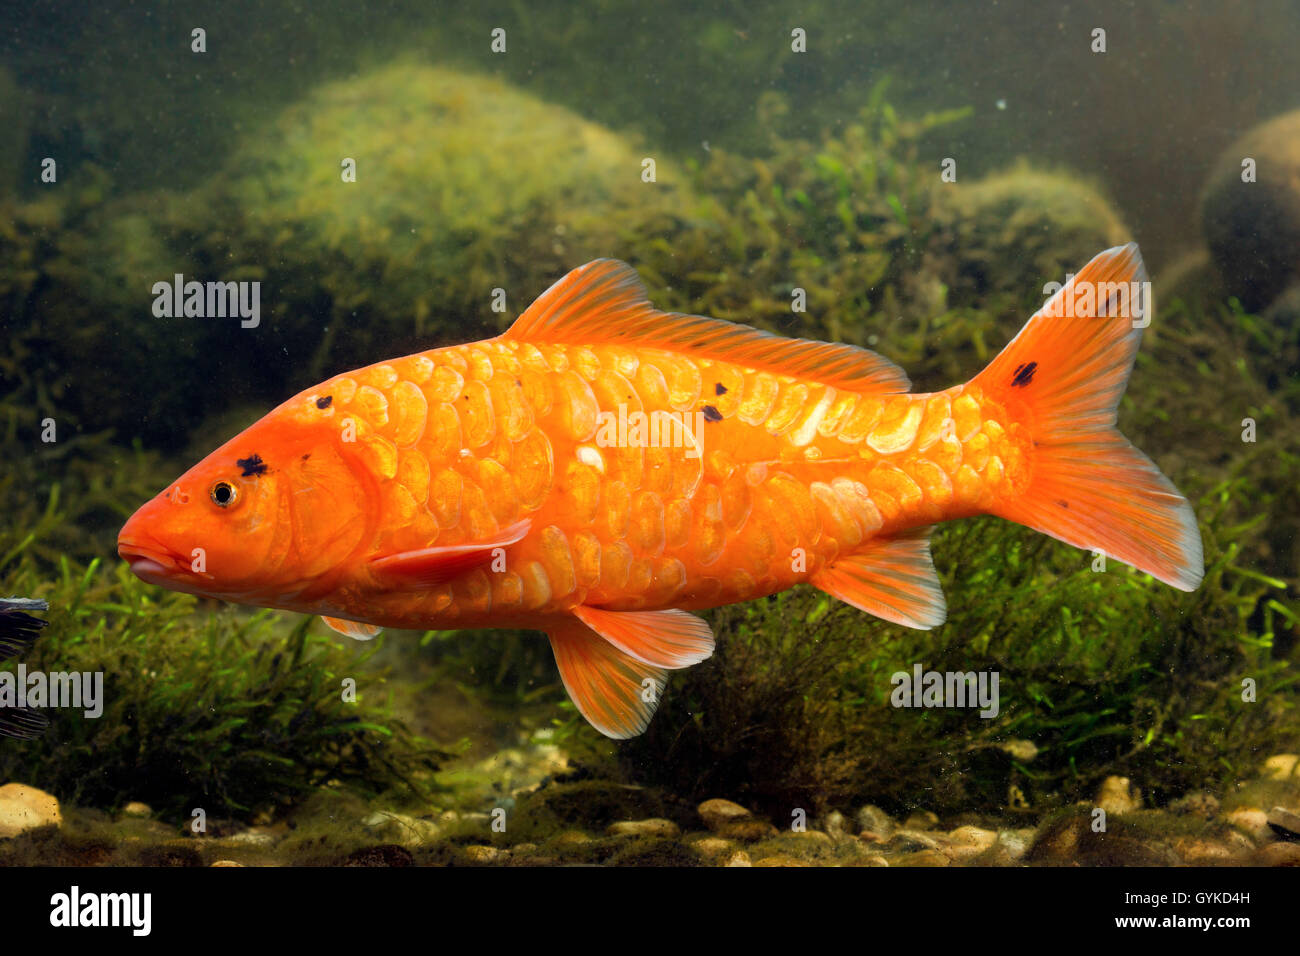 Carpe, carpa comune, europea carpa (Cyprinus carpio), carpa arancione Foto Stock